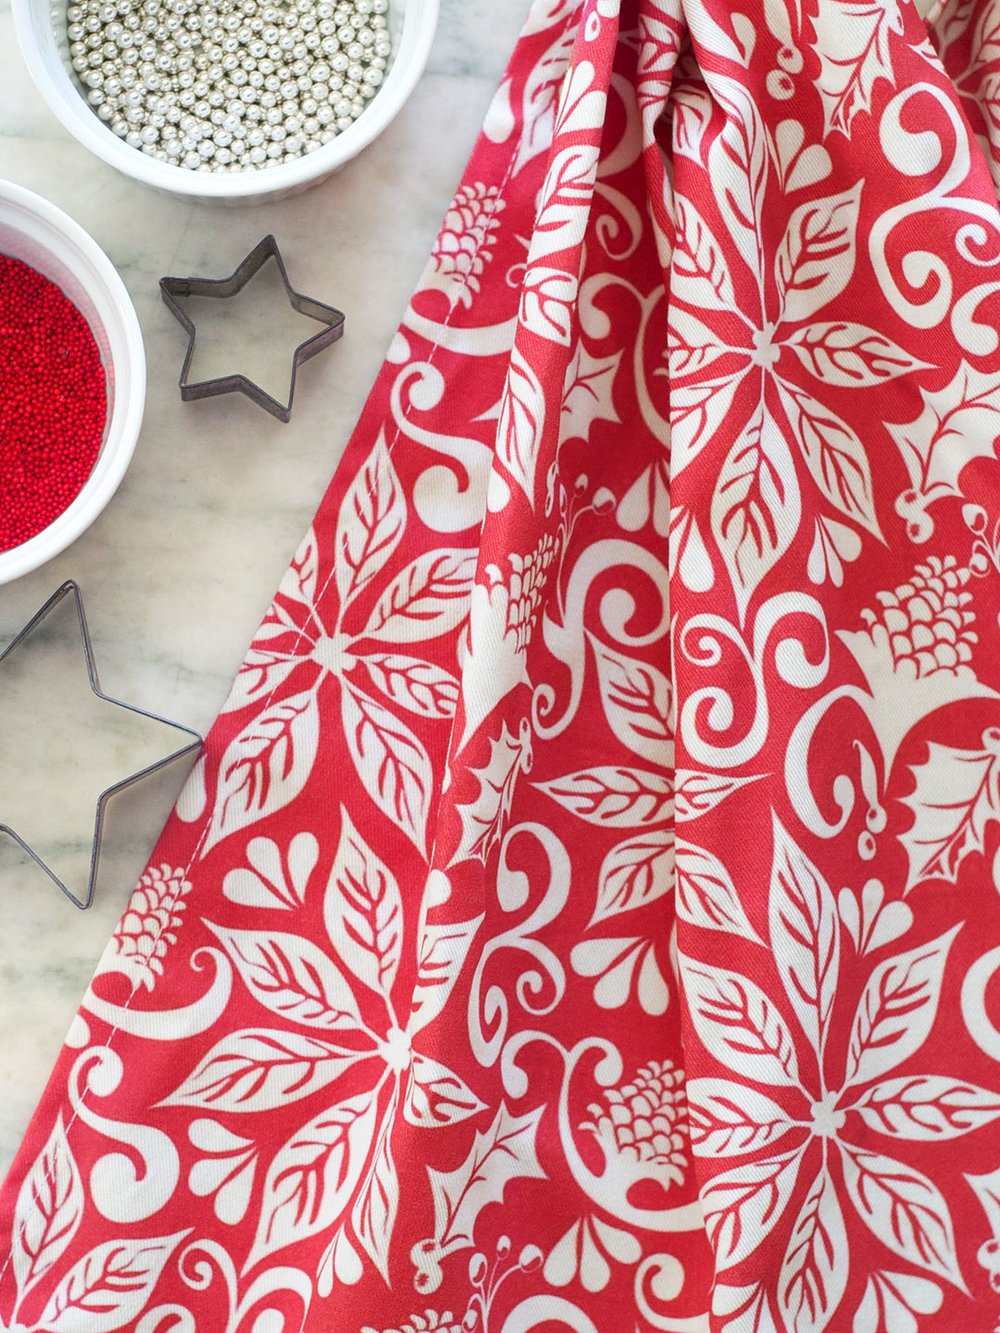 Red Flowers Tea Towel + Poinsettia Swedish Dishcloth Bundle